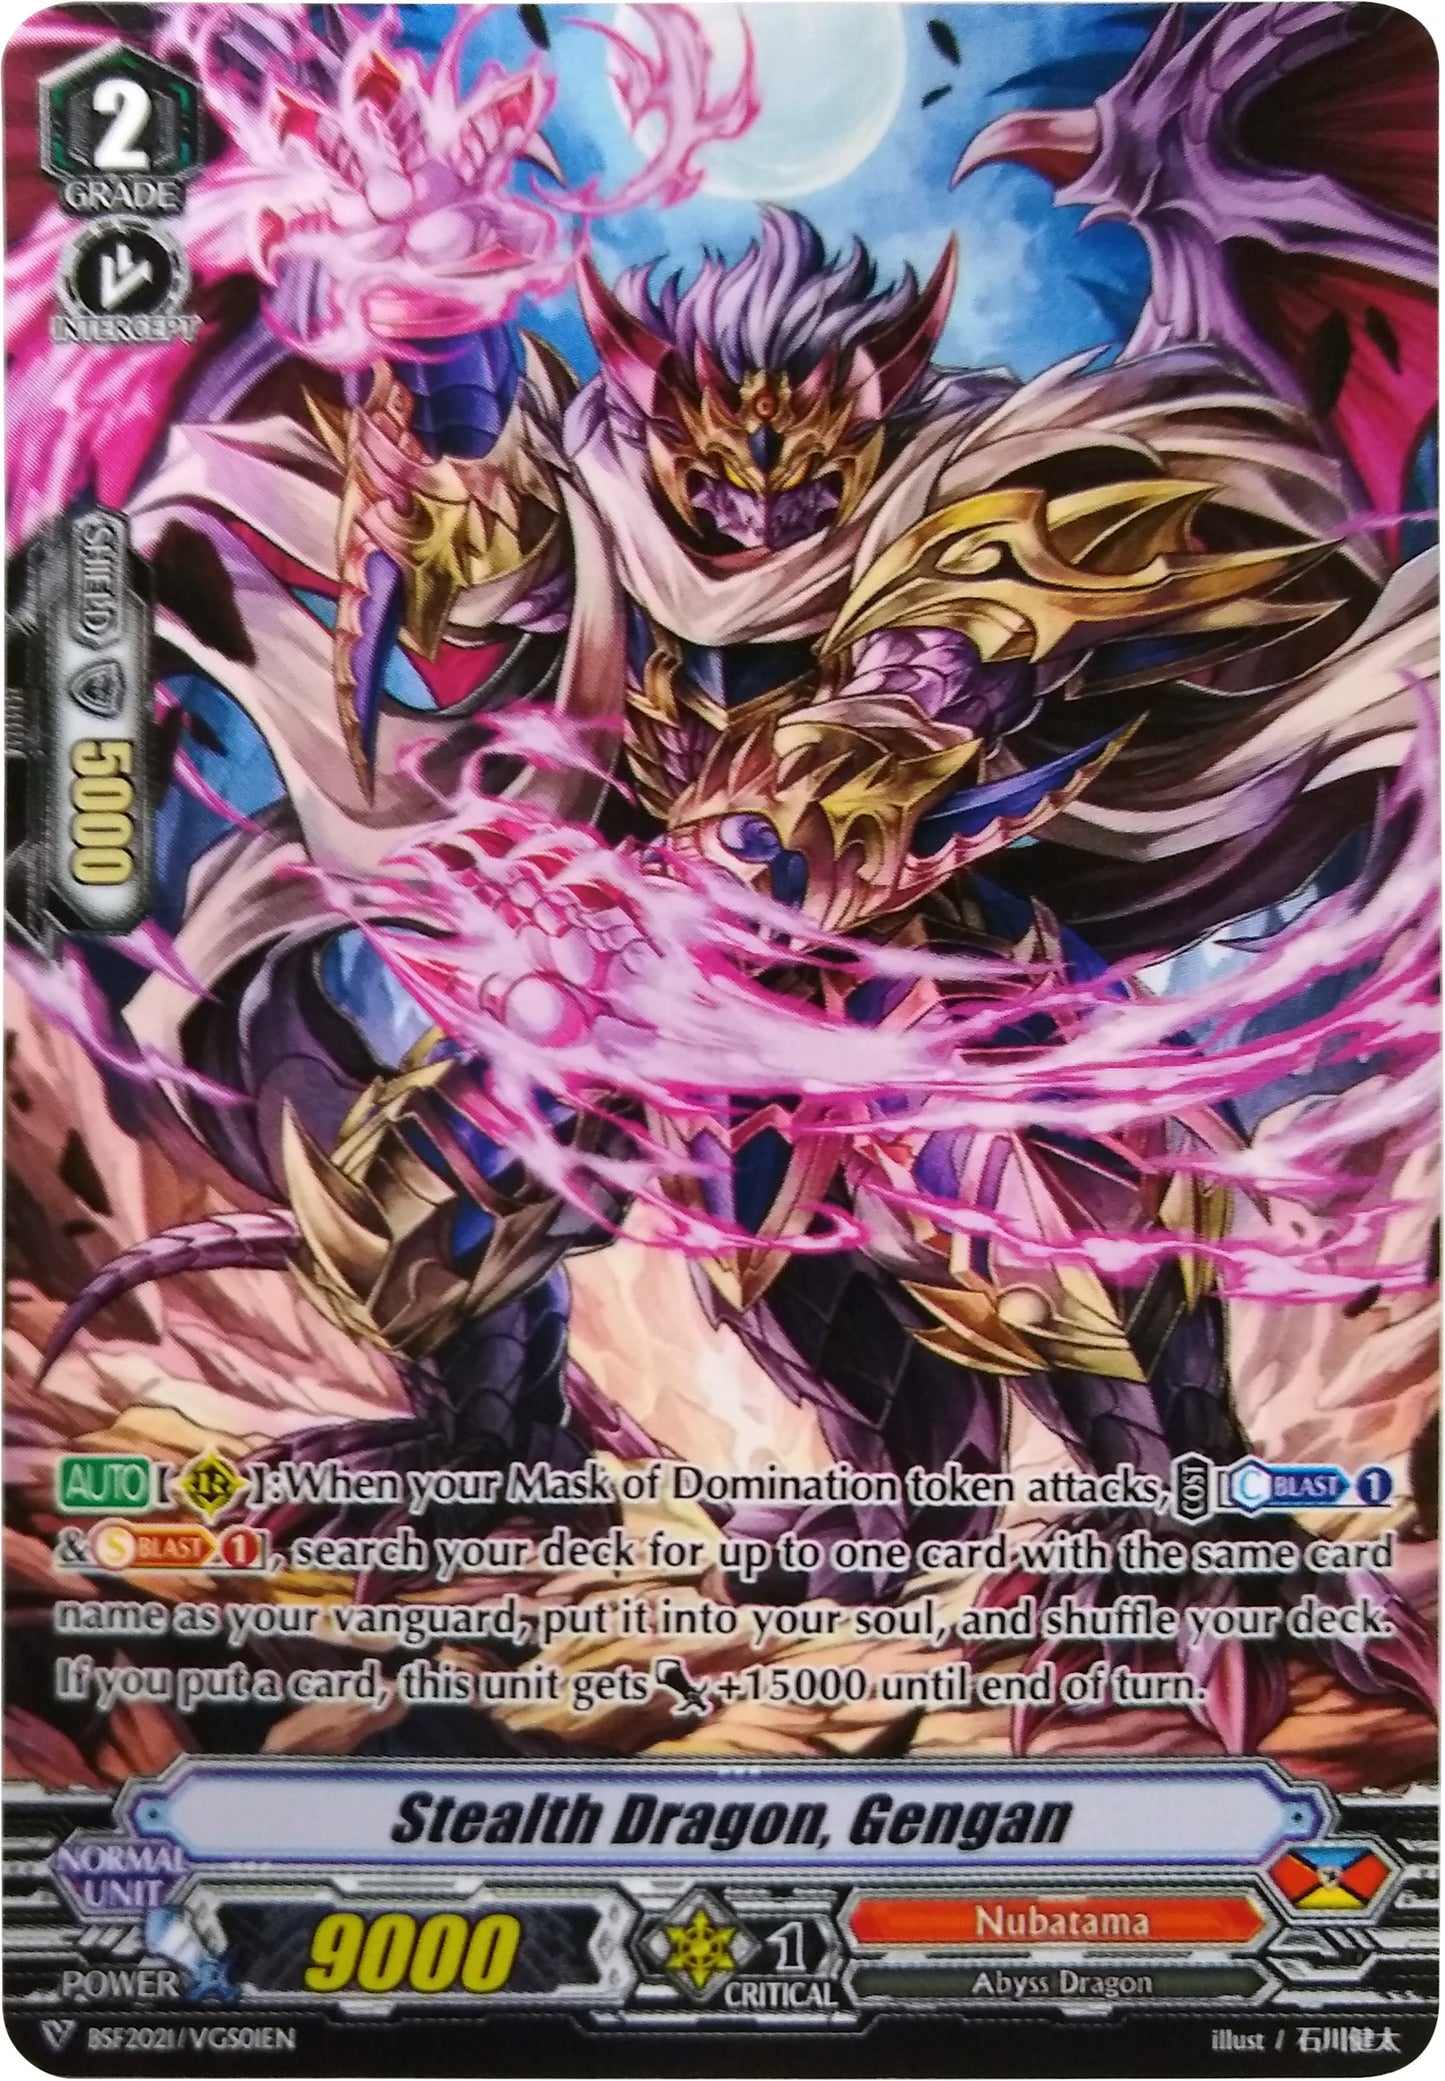 Stealth Dragon, Gengan (BSF2021/VGS01EN) [Bushiroad Event Cards]